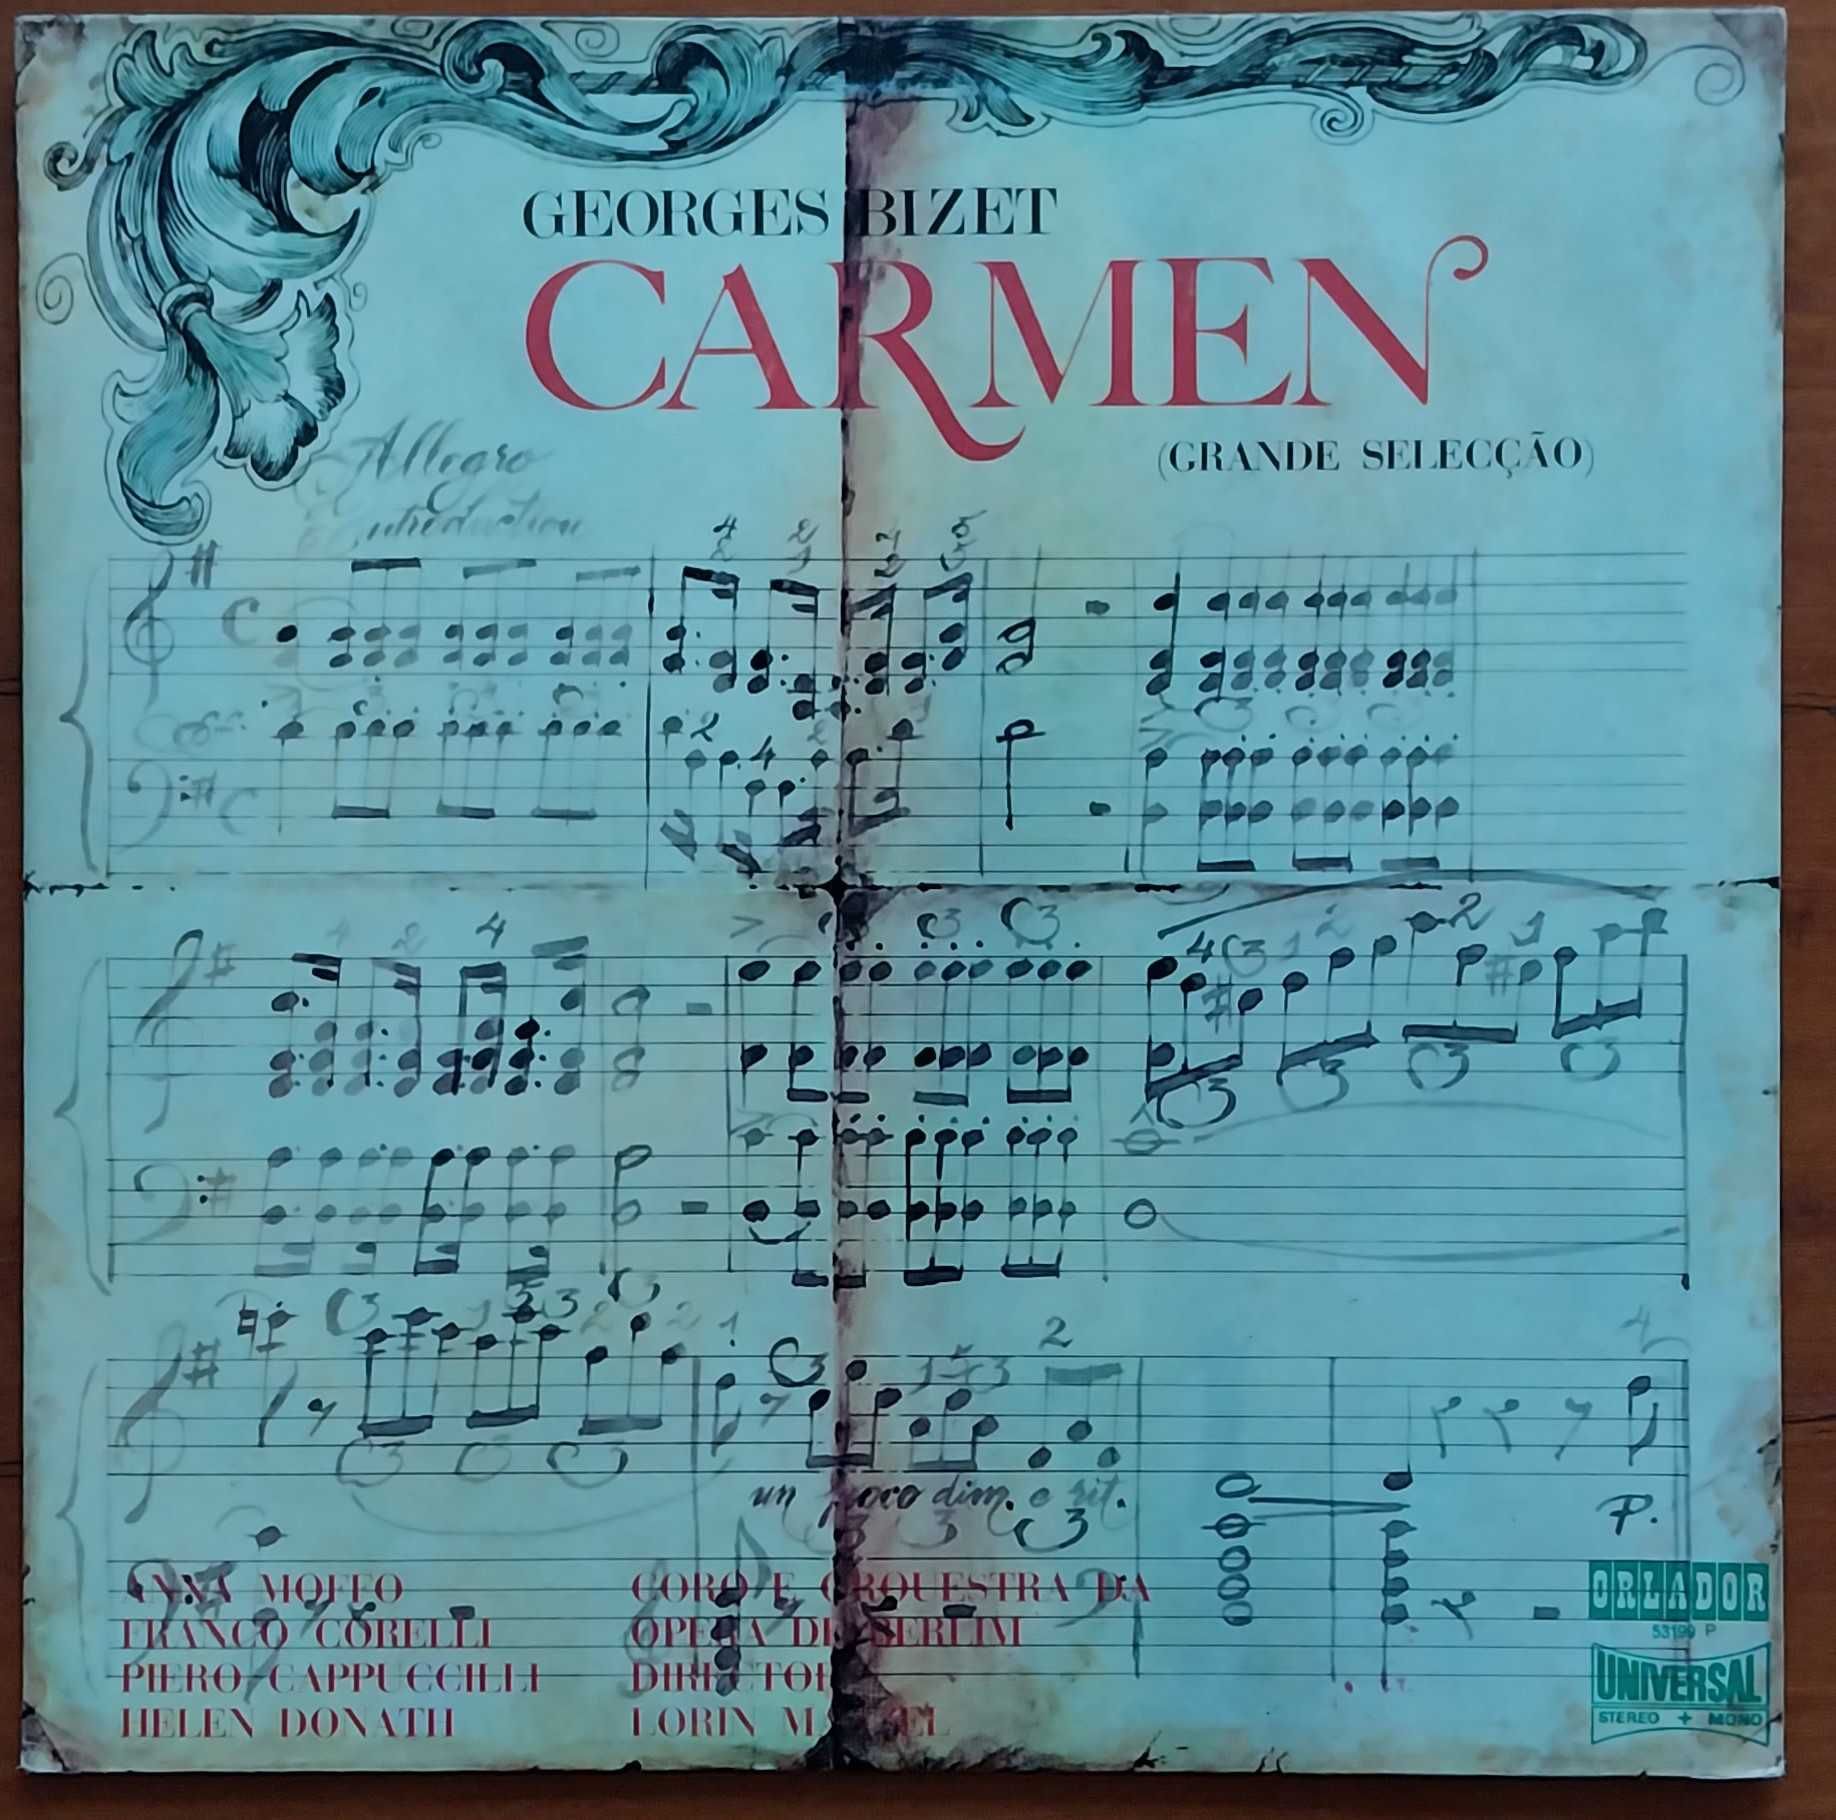 vinil: Lorin Maazel “Georges Bizet – Carmen (Grande selecção)”